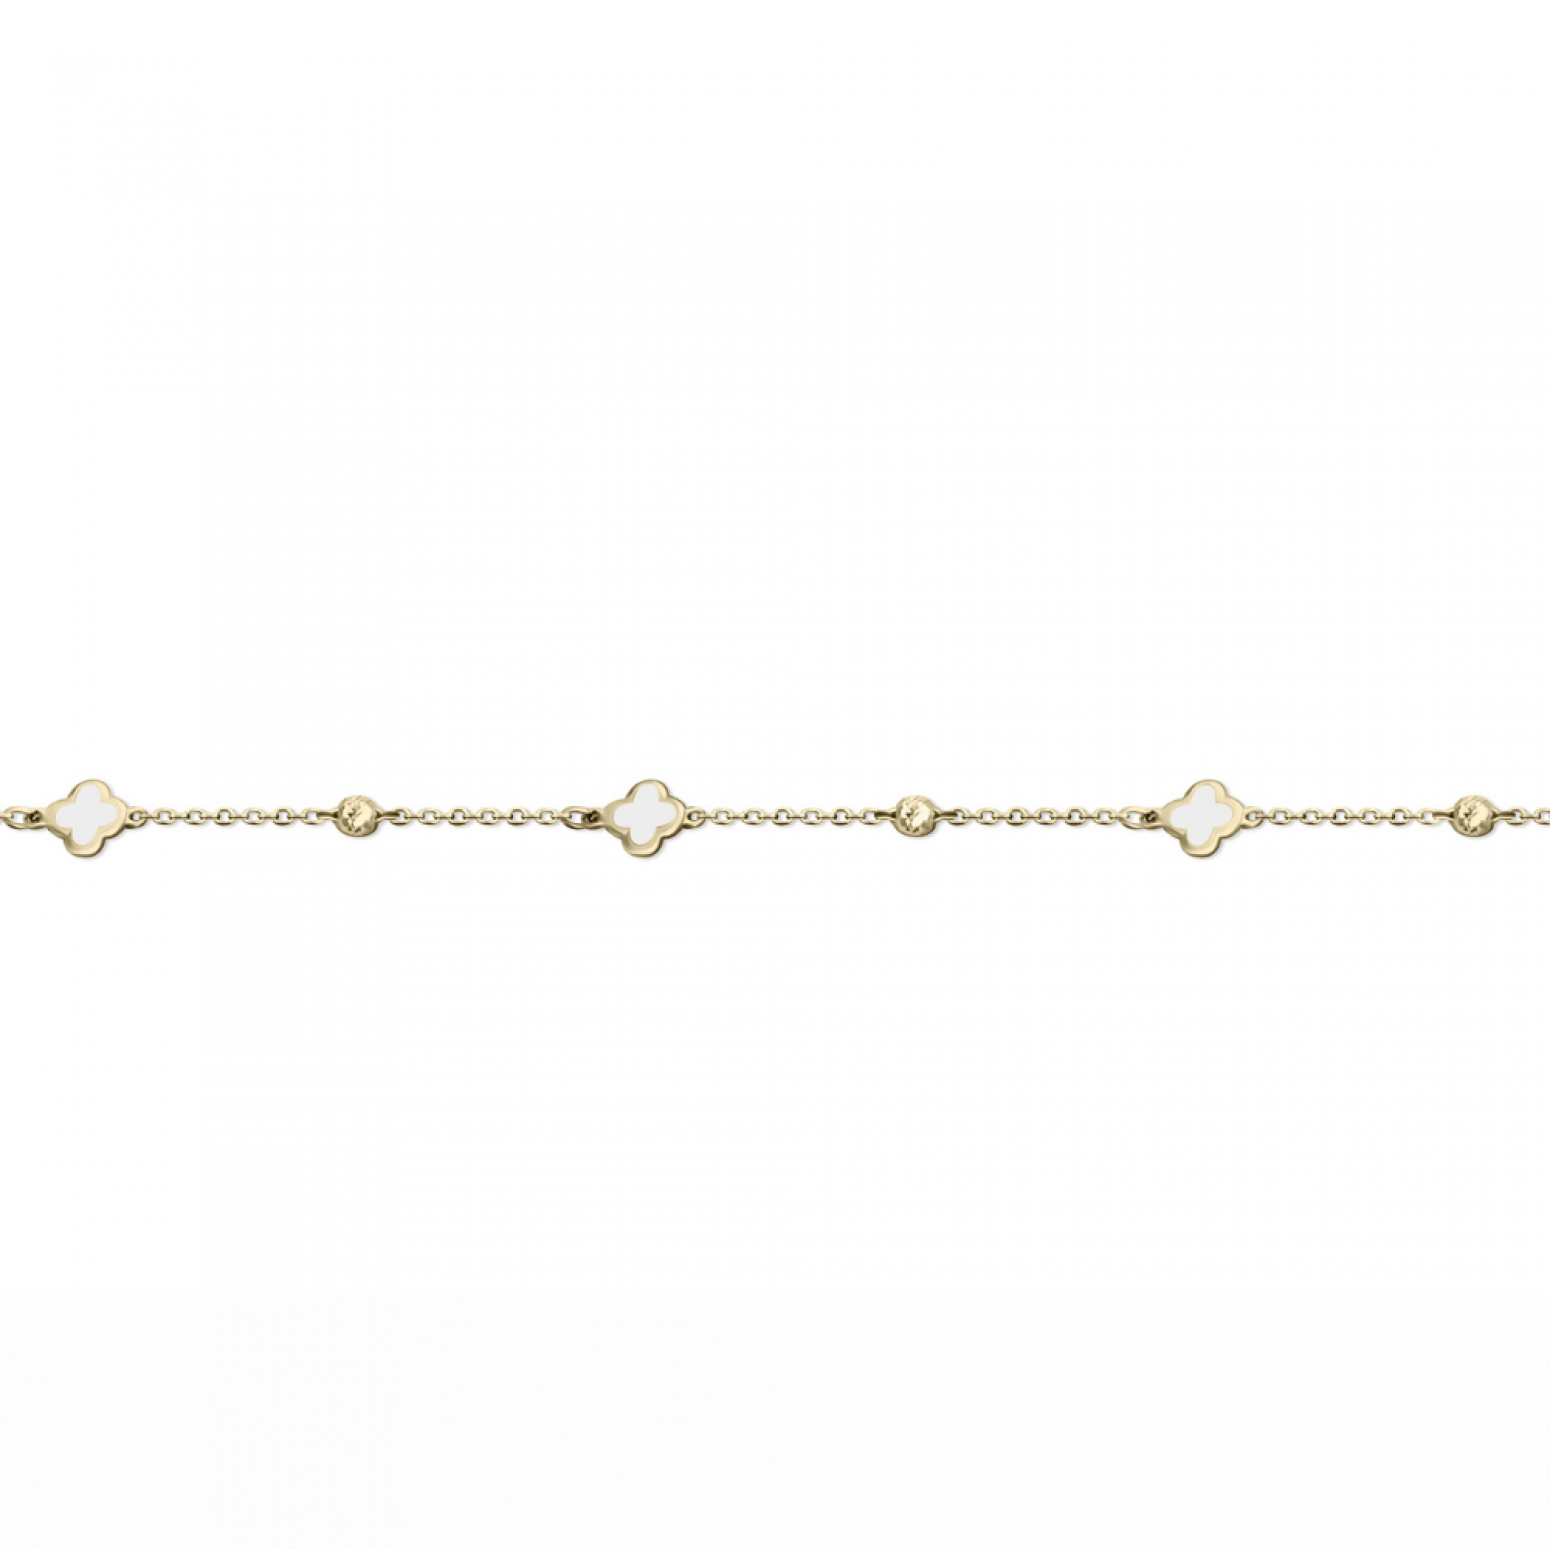 Bracelet with cross Κ14 gold with enamel, br3045 BRACELETS Κοσμηματα - chrilia.gr